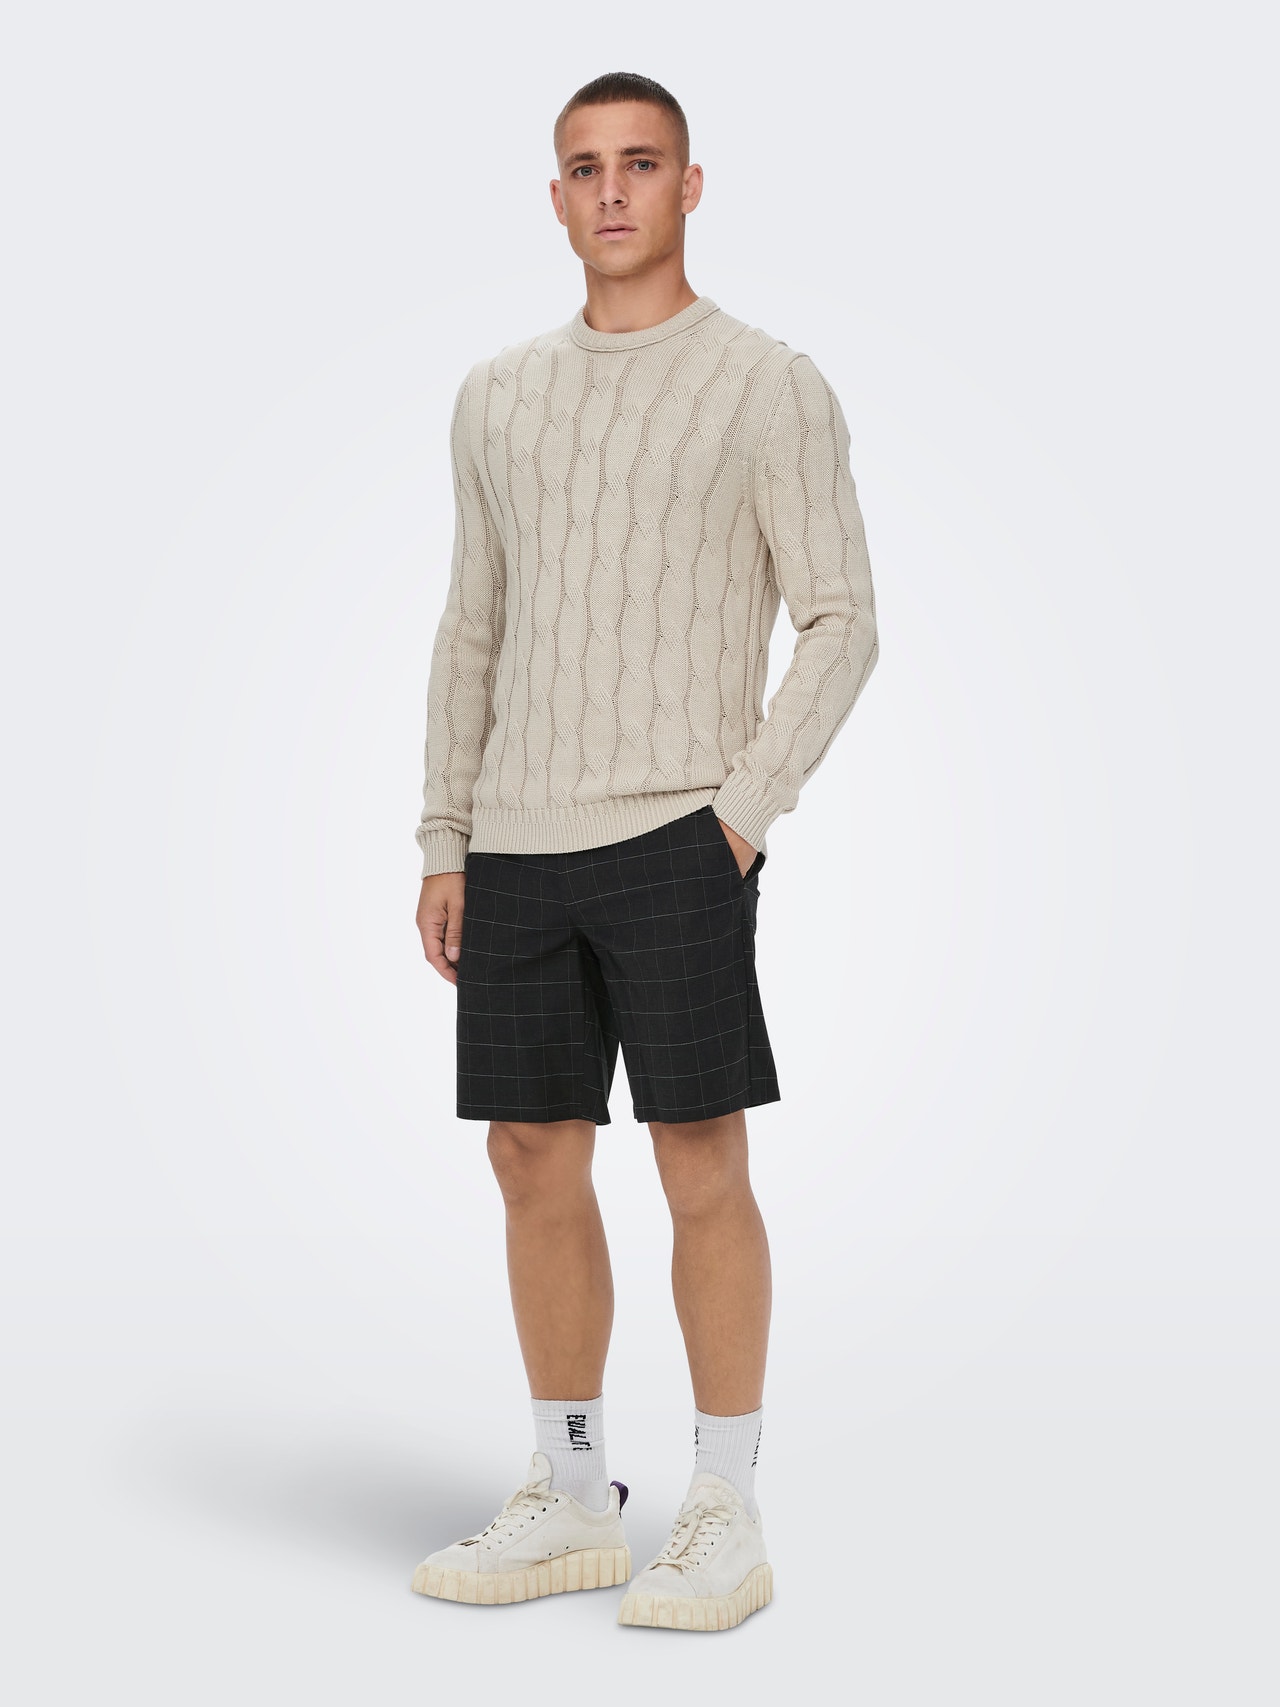 ONLY & SONS Shorts Regular Fit -Black - 22020475